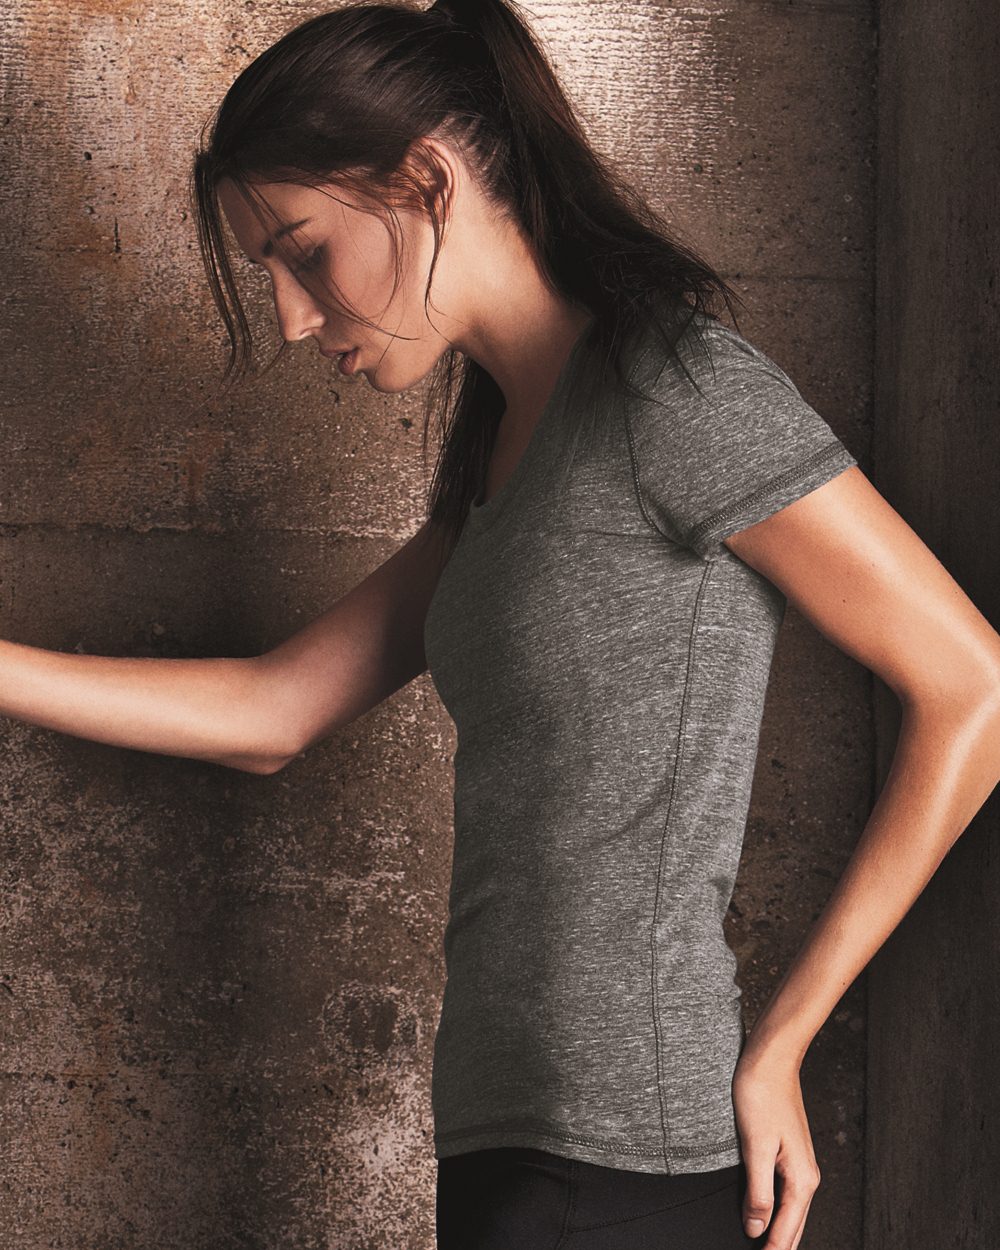 alo - Ladies' Triblend Short Sleeve T-Shirt - W1101